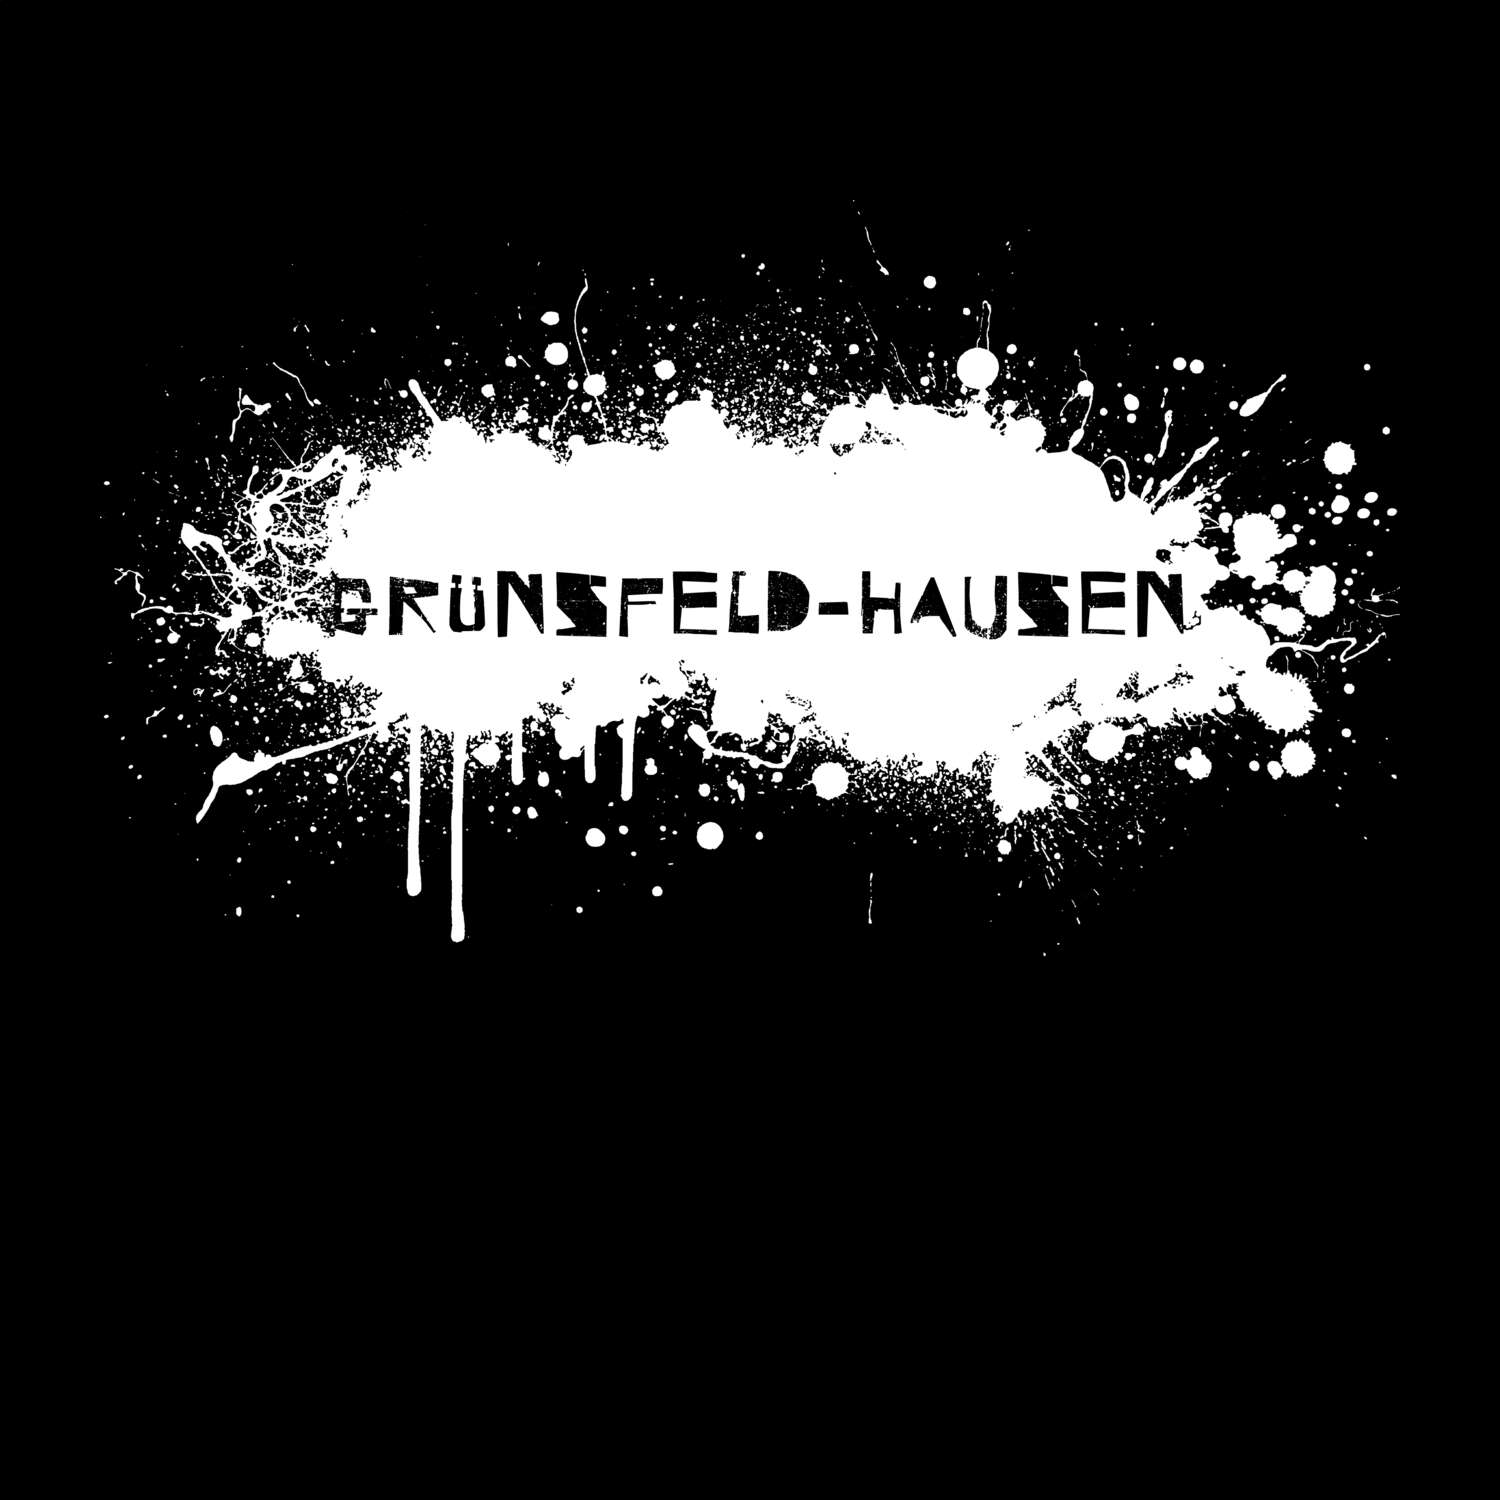 Grünsfeld-Hausen T-Shirt »Paint Splash Punk«